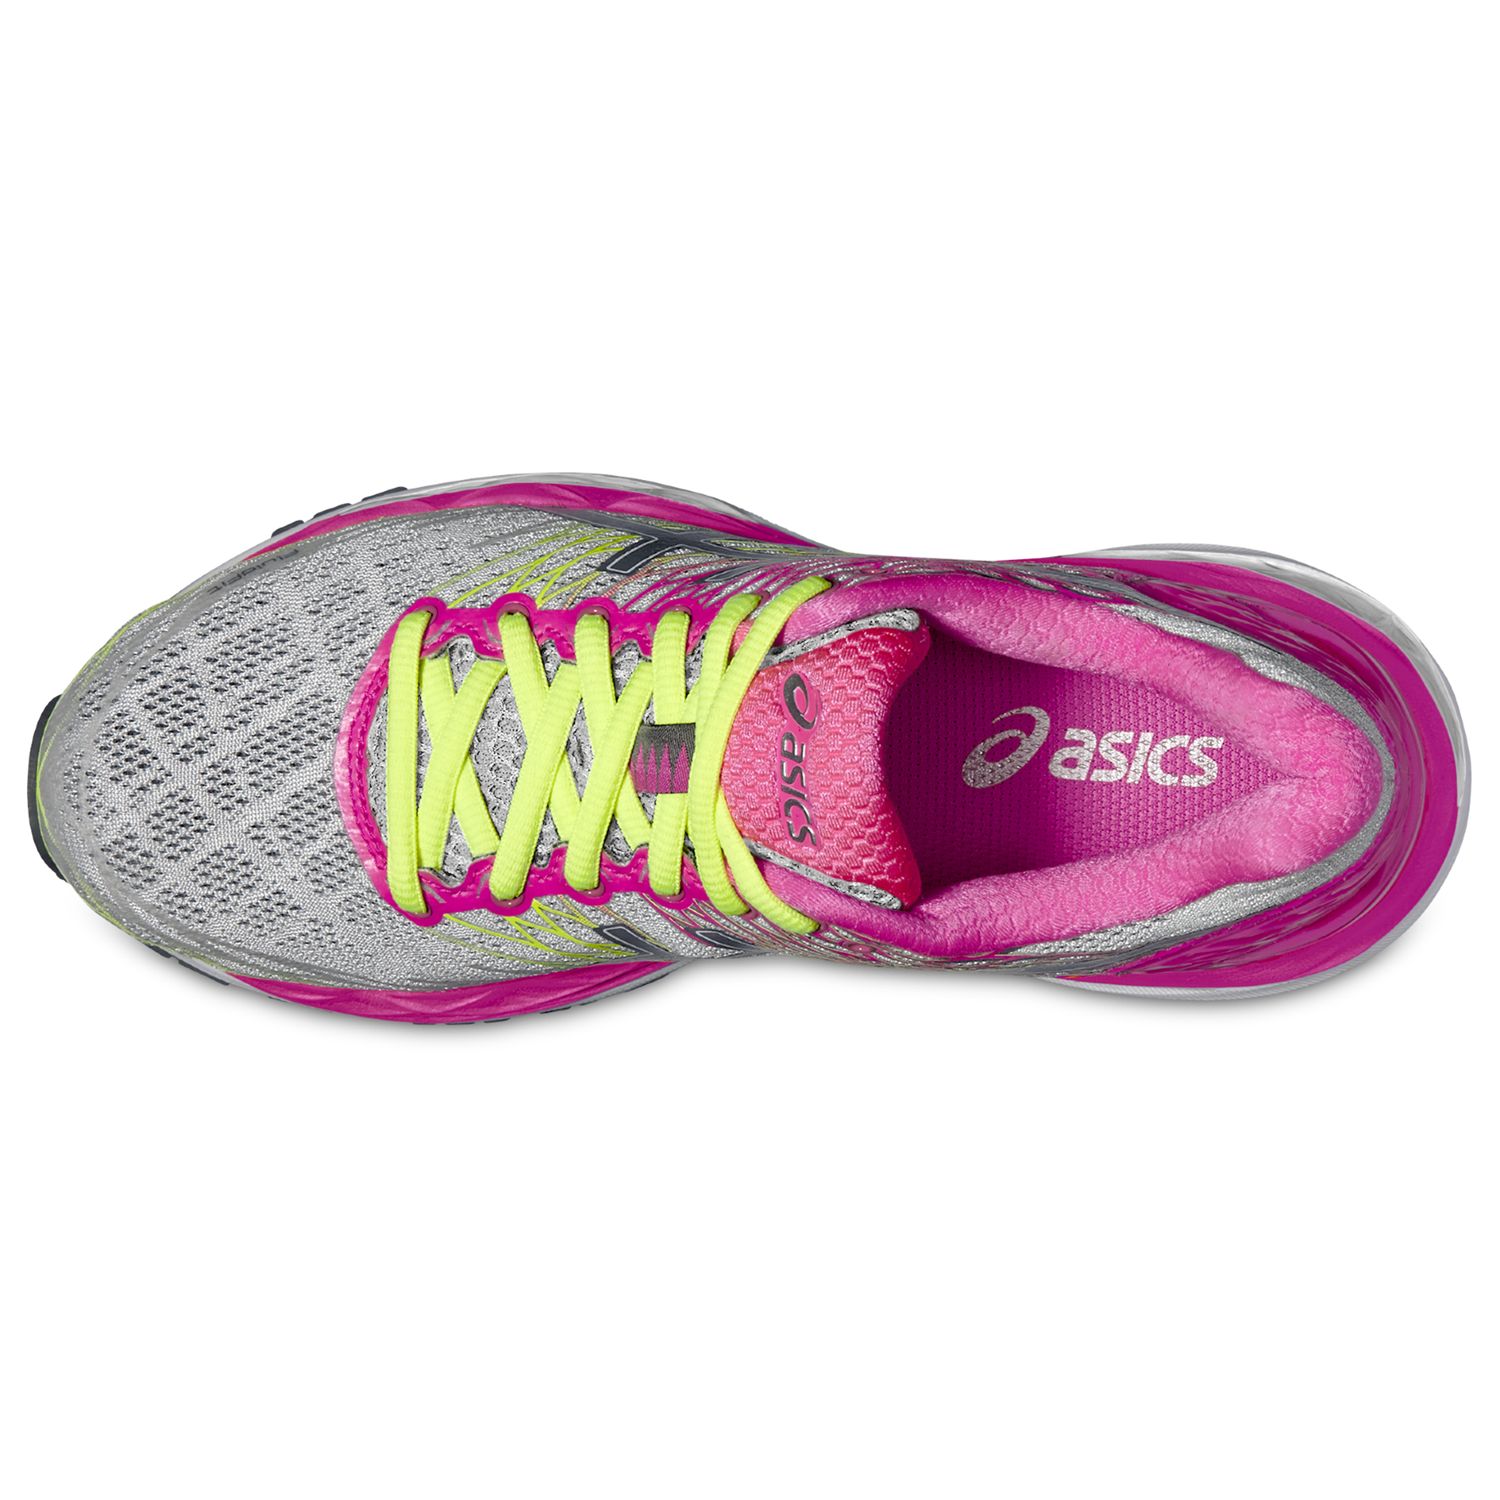 asics women's gel nimbus 18 running shoes